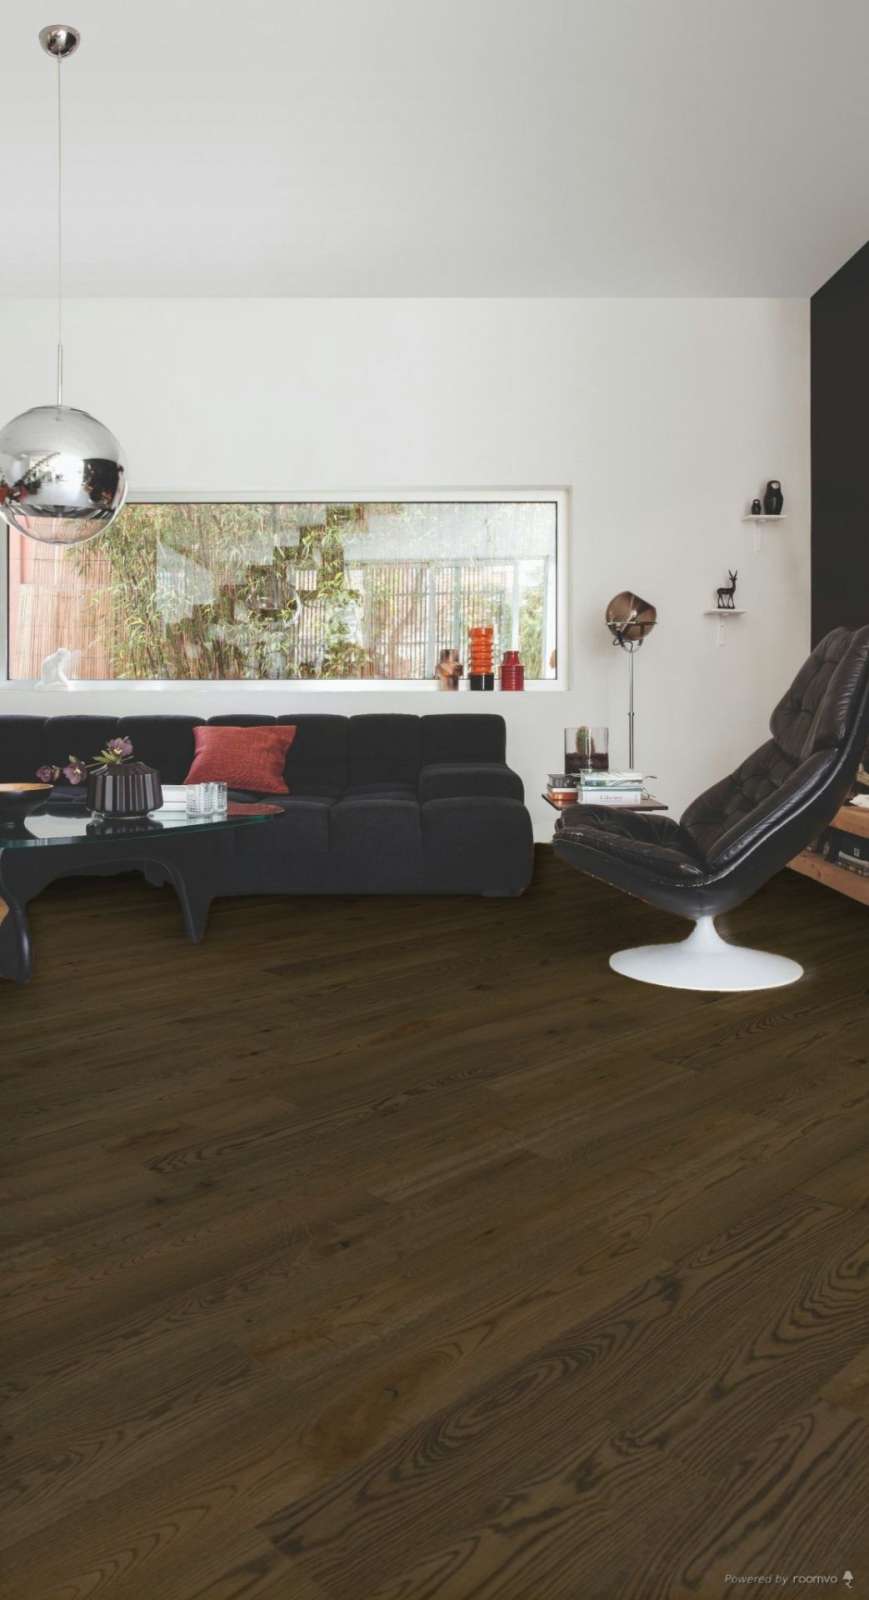 Esco - Kolonial Elegance 15/4x190mm (Gotik) KOL008 / 022N - dřevěná třívrstvá podlaha